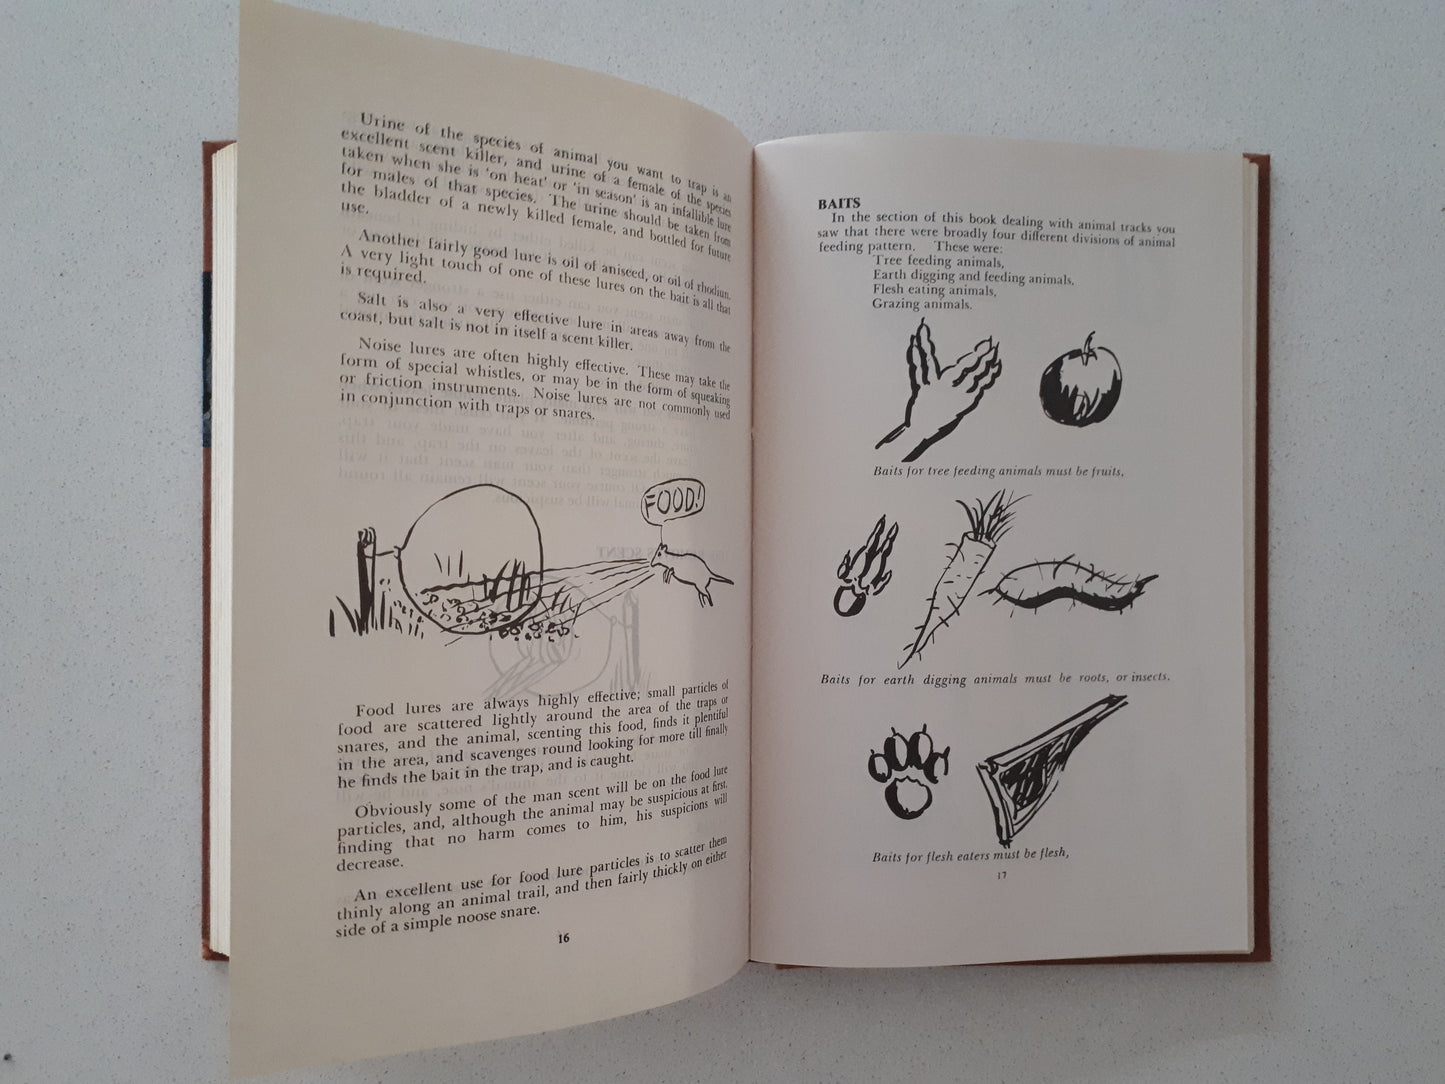 The 10 Bushcraft Books by Richard Graves